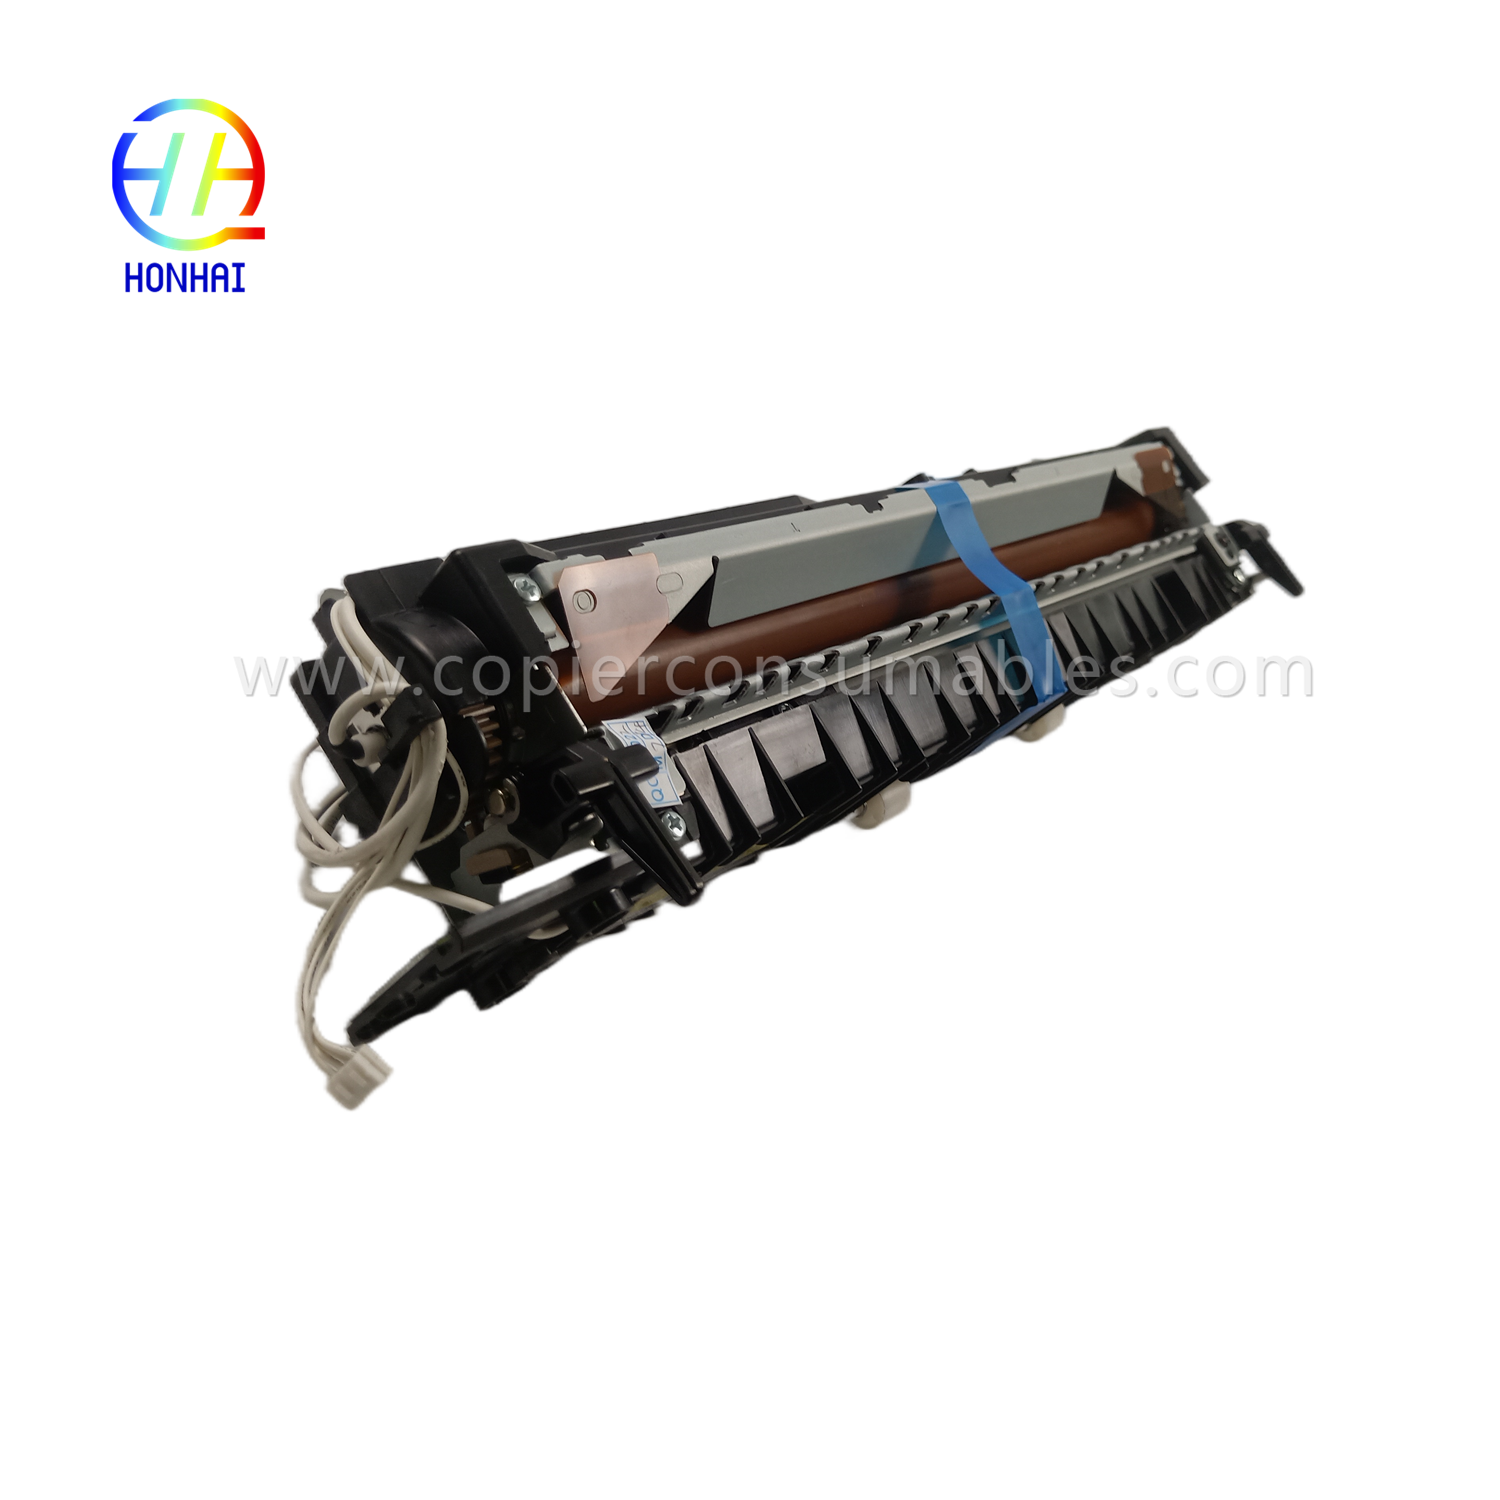 https://www.copierconsumables.com/fuser-unit-for-samsung-jc91-01163a-4250-4350-k4250-k4350-k4250rx-k4350lx-k4250lx-fuser-assembly-product/product